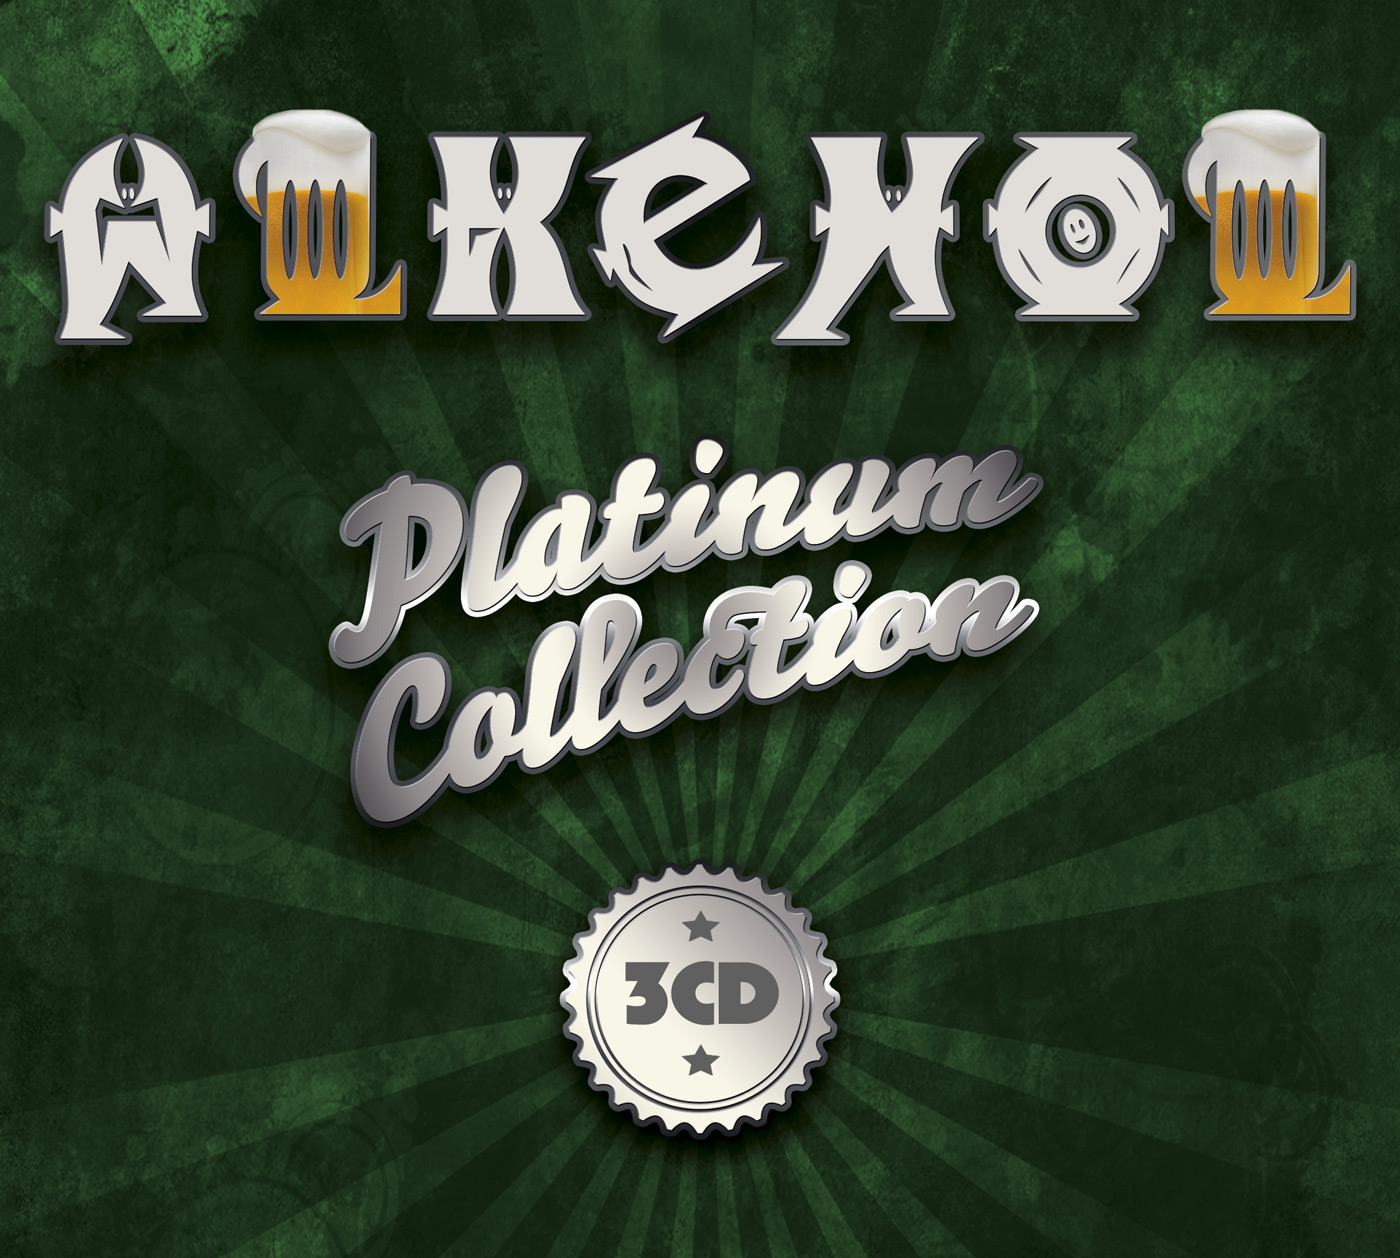 Alkehol - Platinum Collection